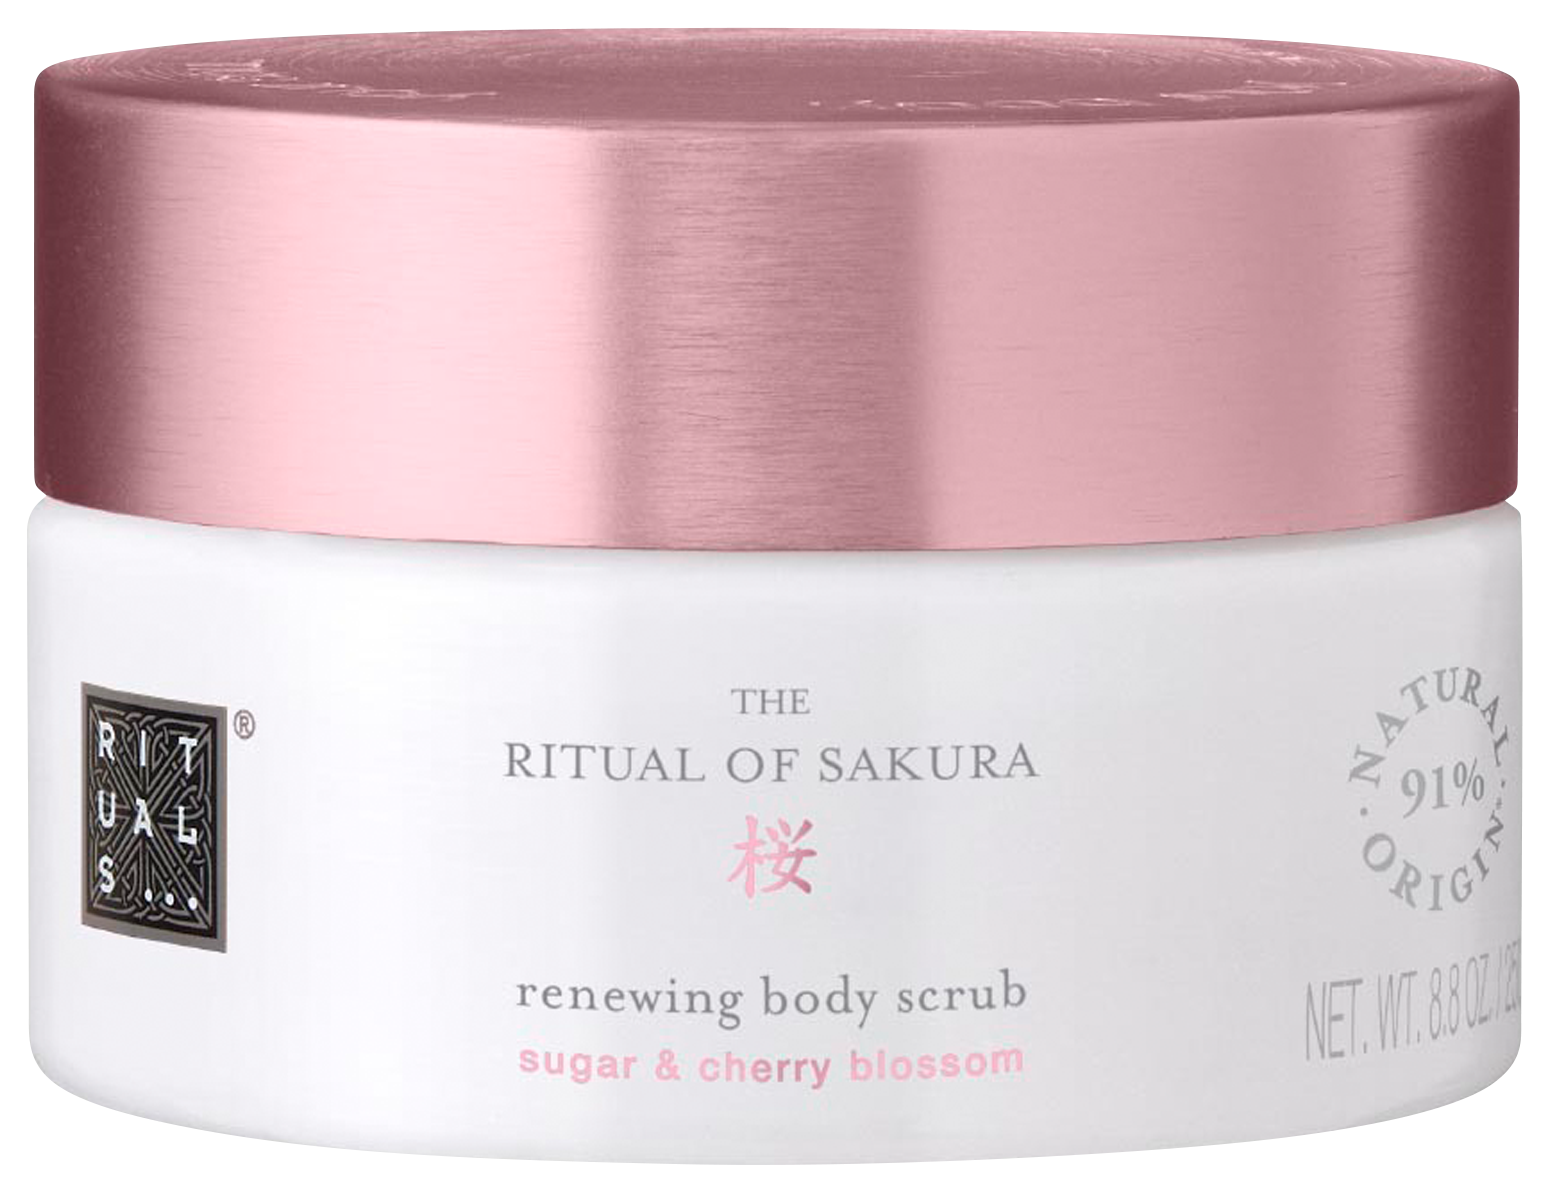 Rituals The Ritual of Sakura Body Scrub, 250g